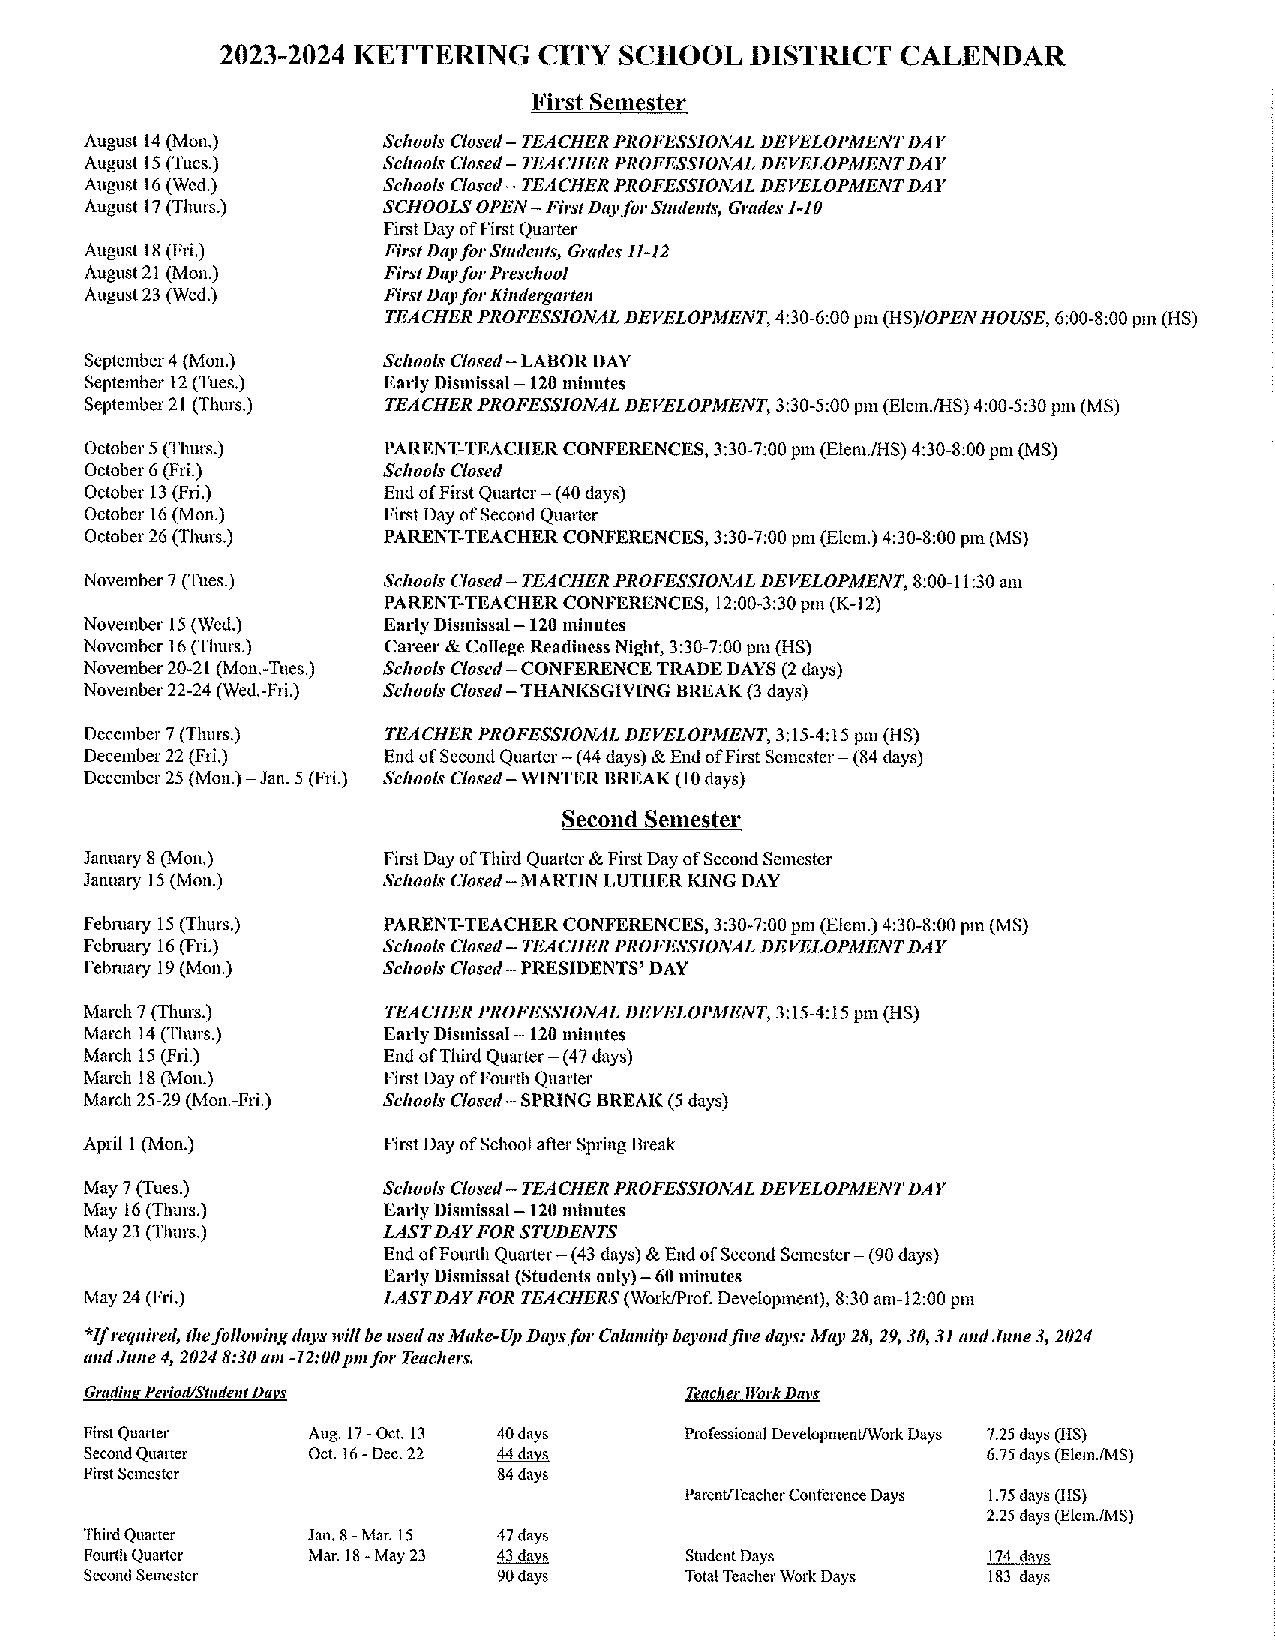 Kettering City School District Calendar 20232024 in PDF